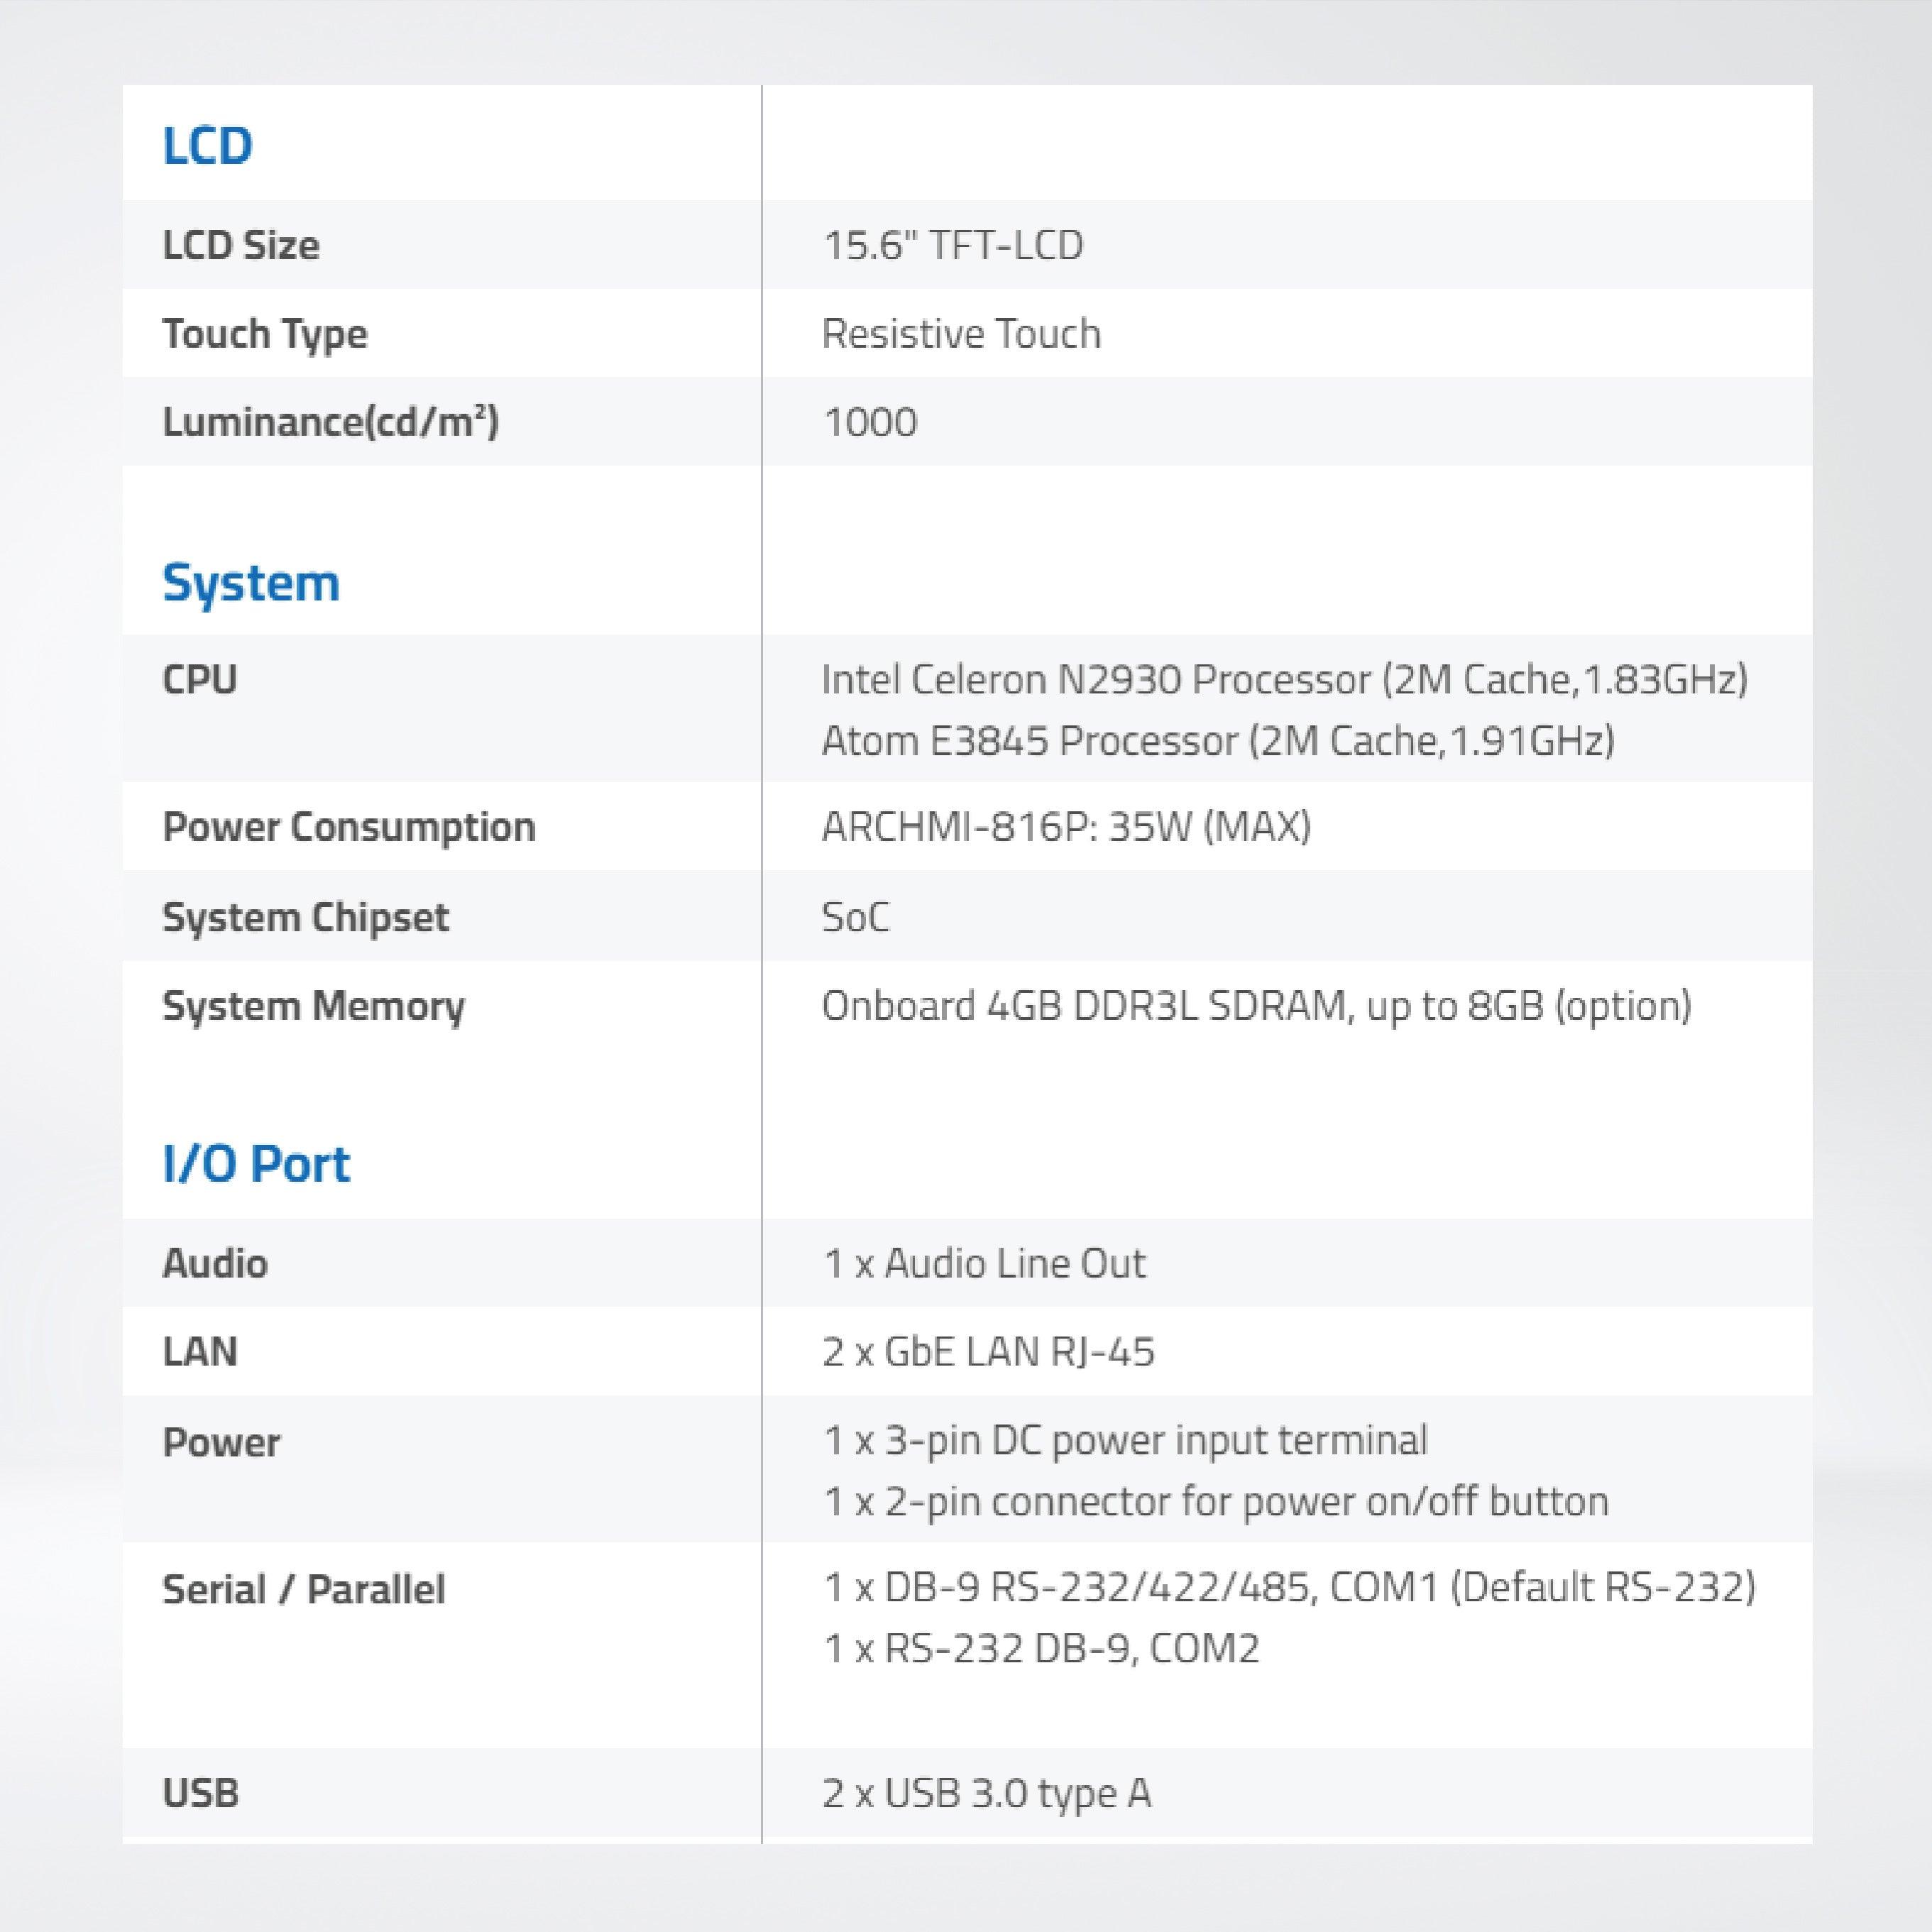 ARCHMI-816H 15.6" Intel Celeron N2930/ Atom E3845, Fanless Industrial Compact Size Panel PC - Riverplus